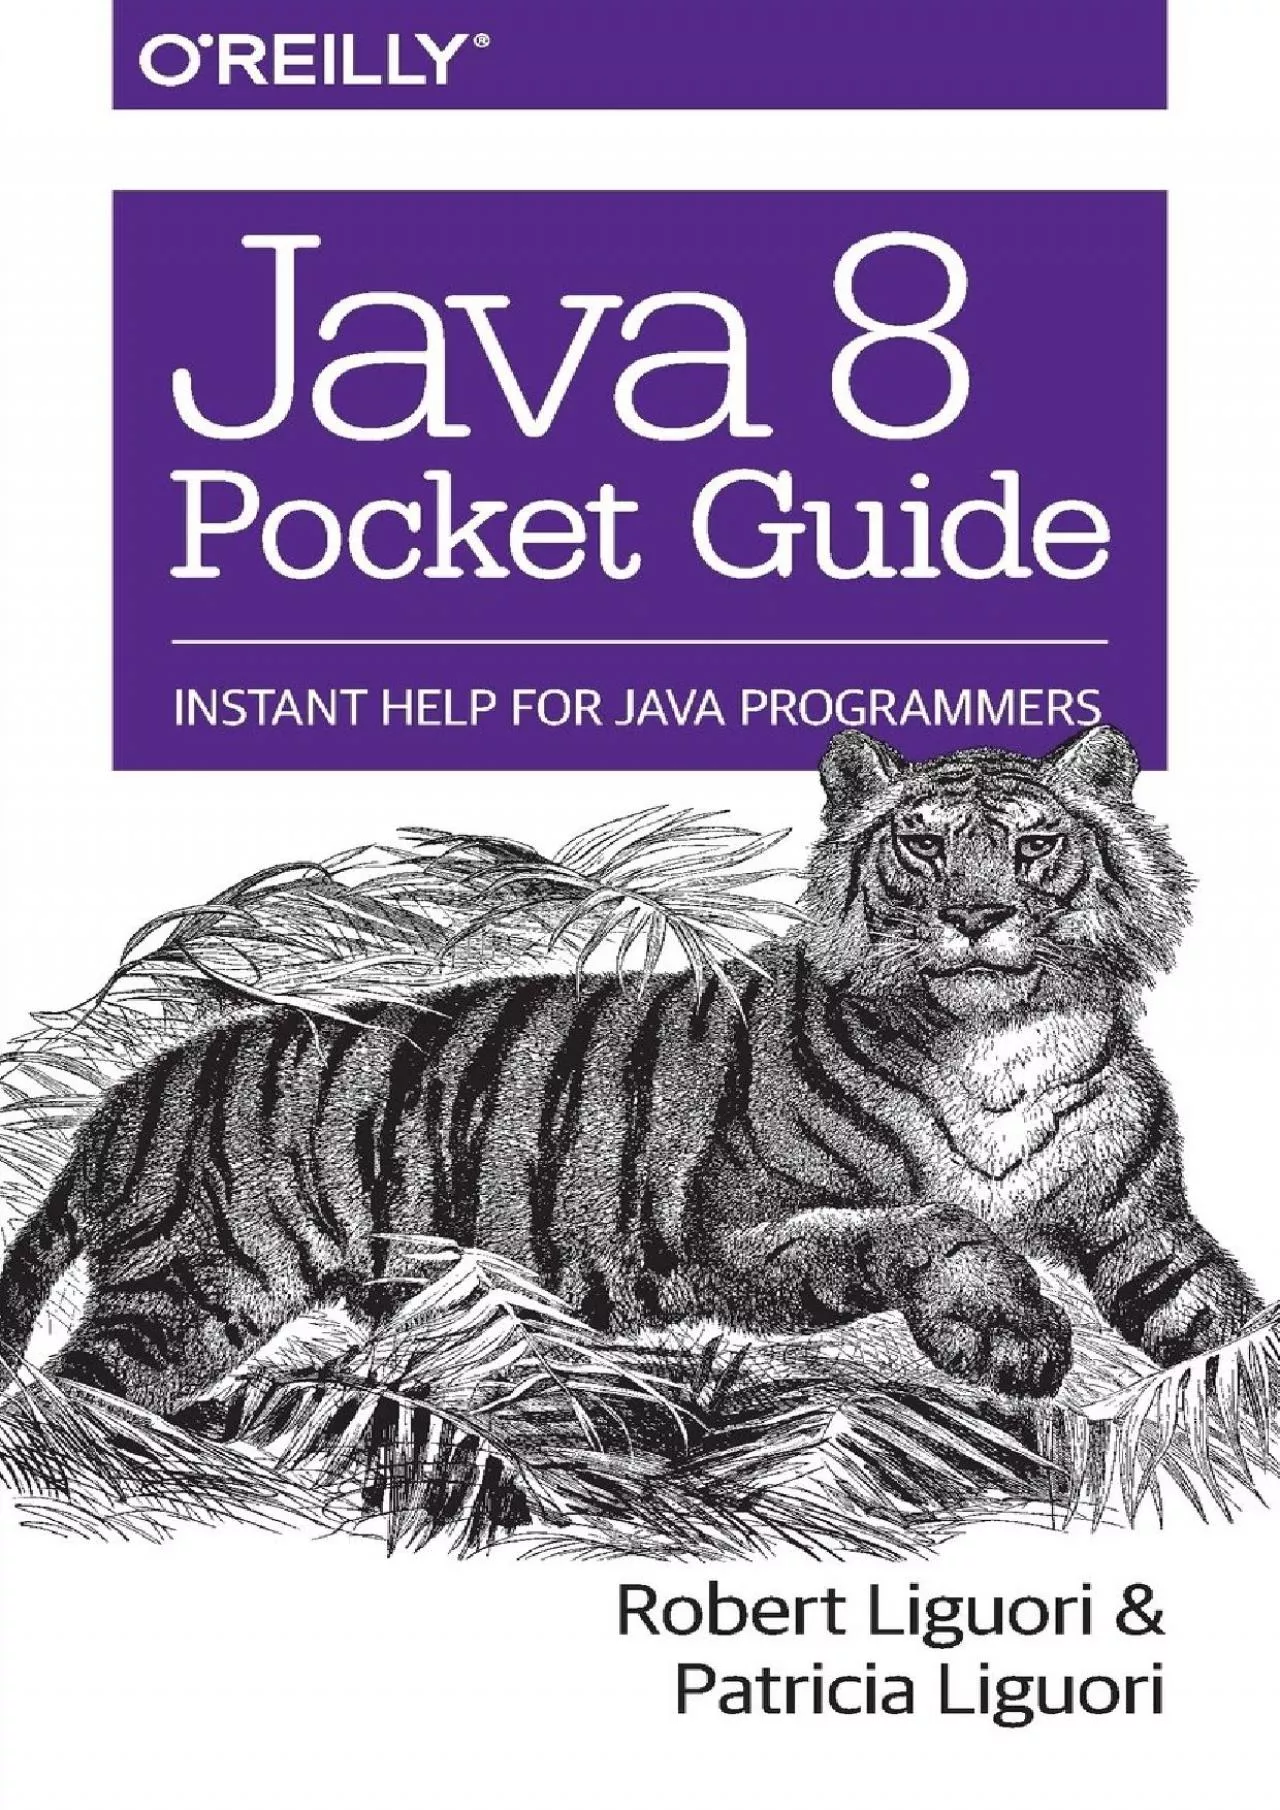 [FREE]-Java 8 Pocket Guide: Instant Help for Java Programmers